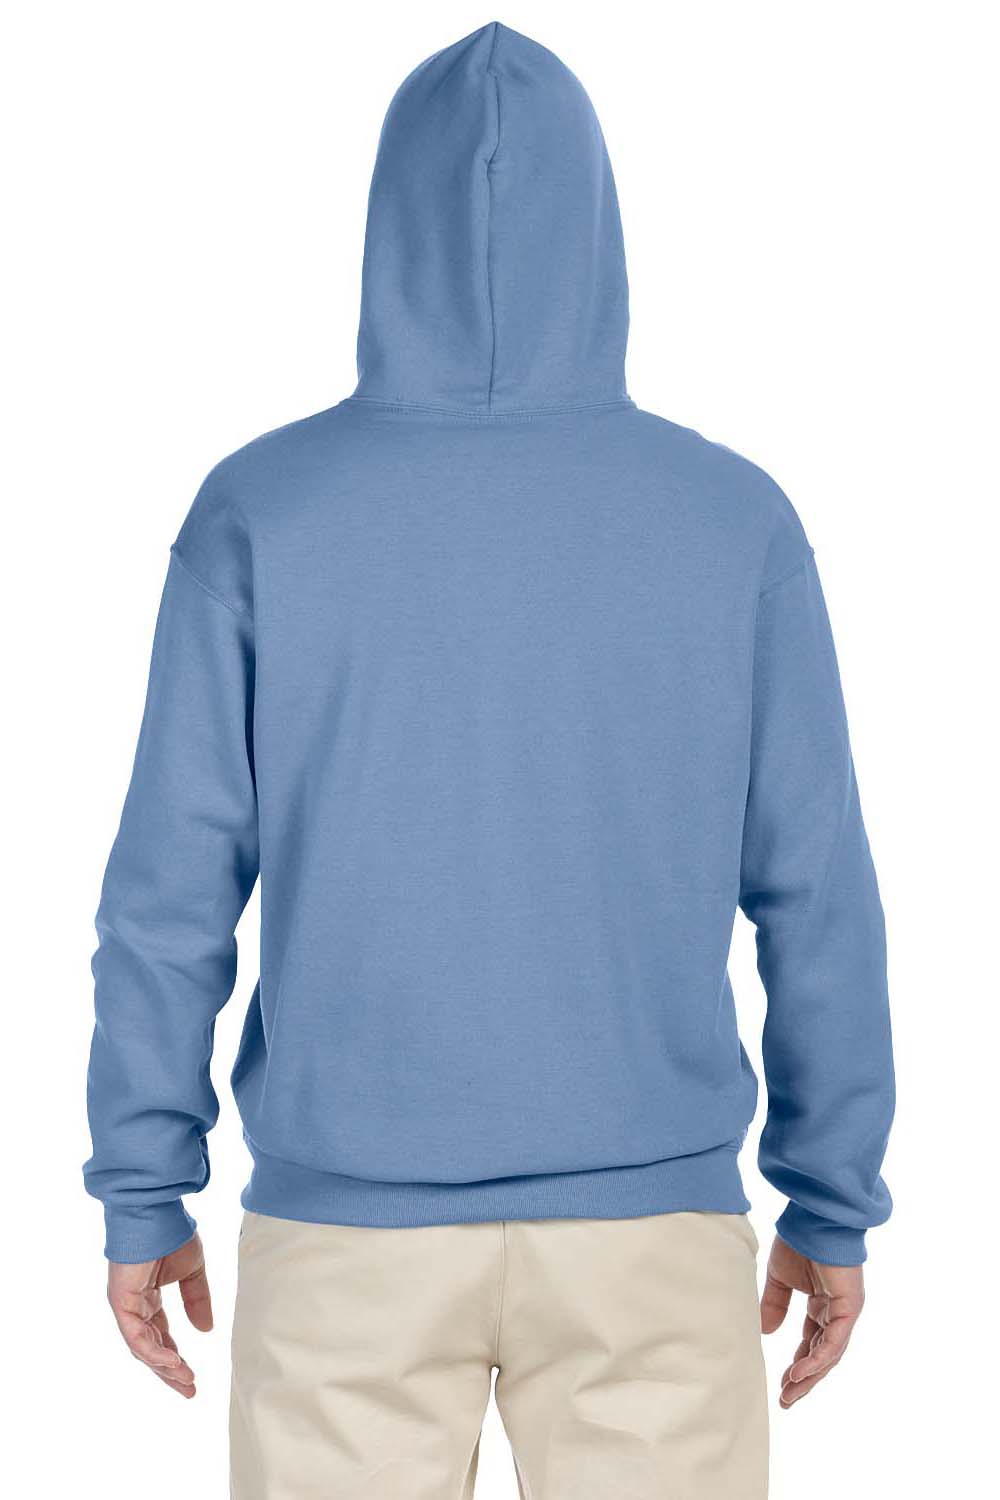 Jerzees 996 Mens NuBlend Fleece Hooded Sweatshirt Hoodie Light Blue Back